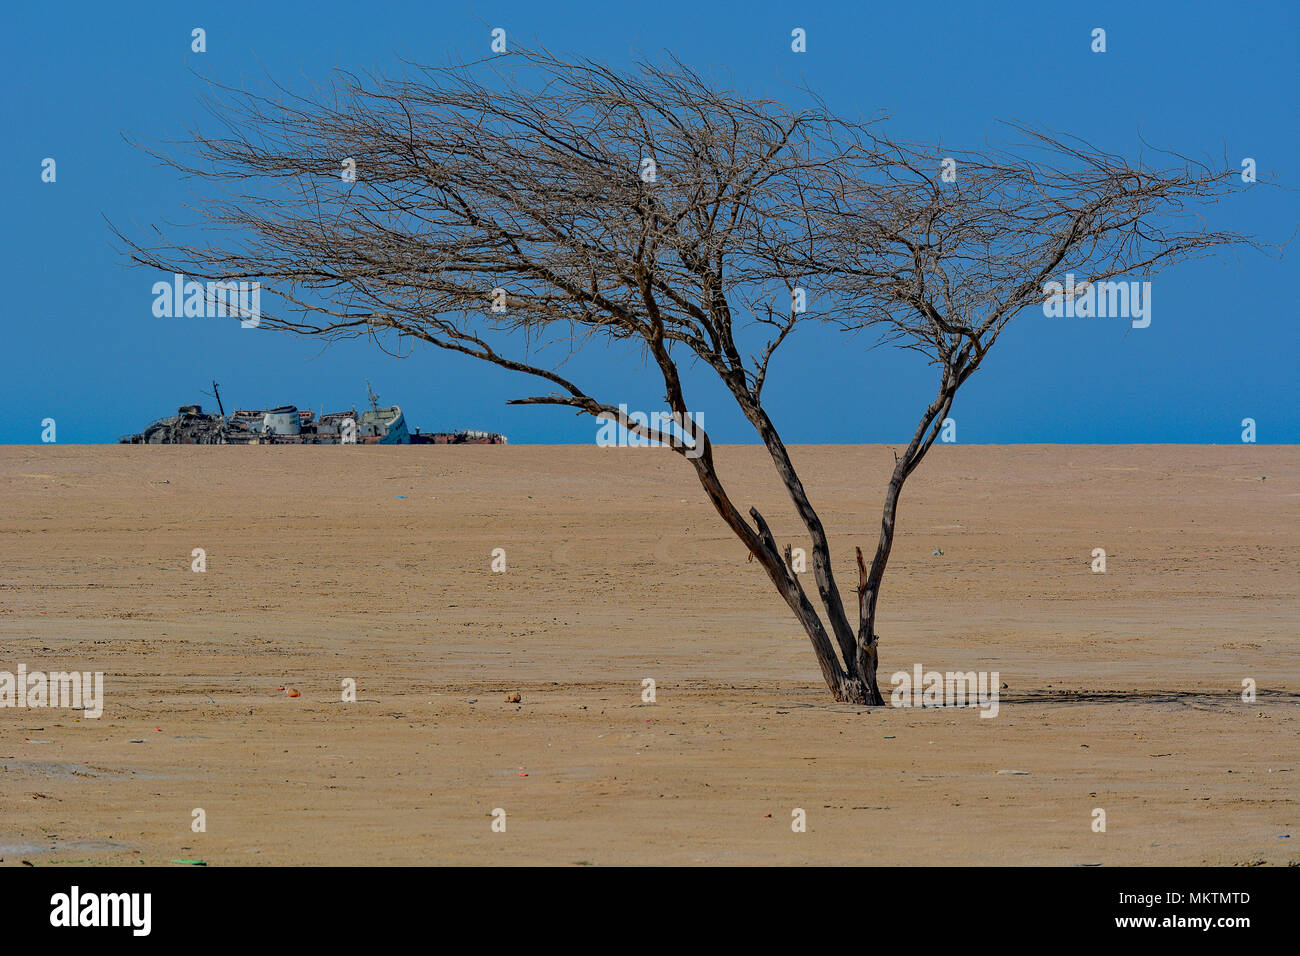 Juxtaposition of tree in desert coastline with derelict ship on the Red Sea coast of Saudi Arabia. Stock Photo